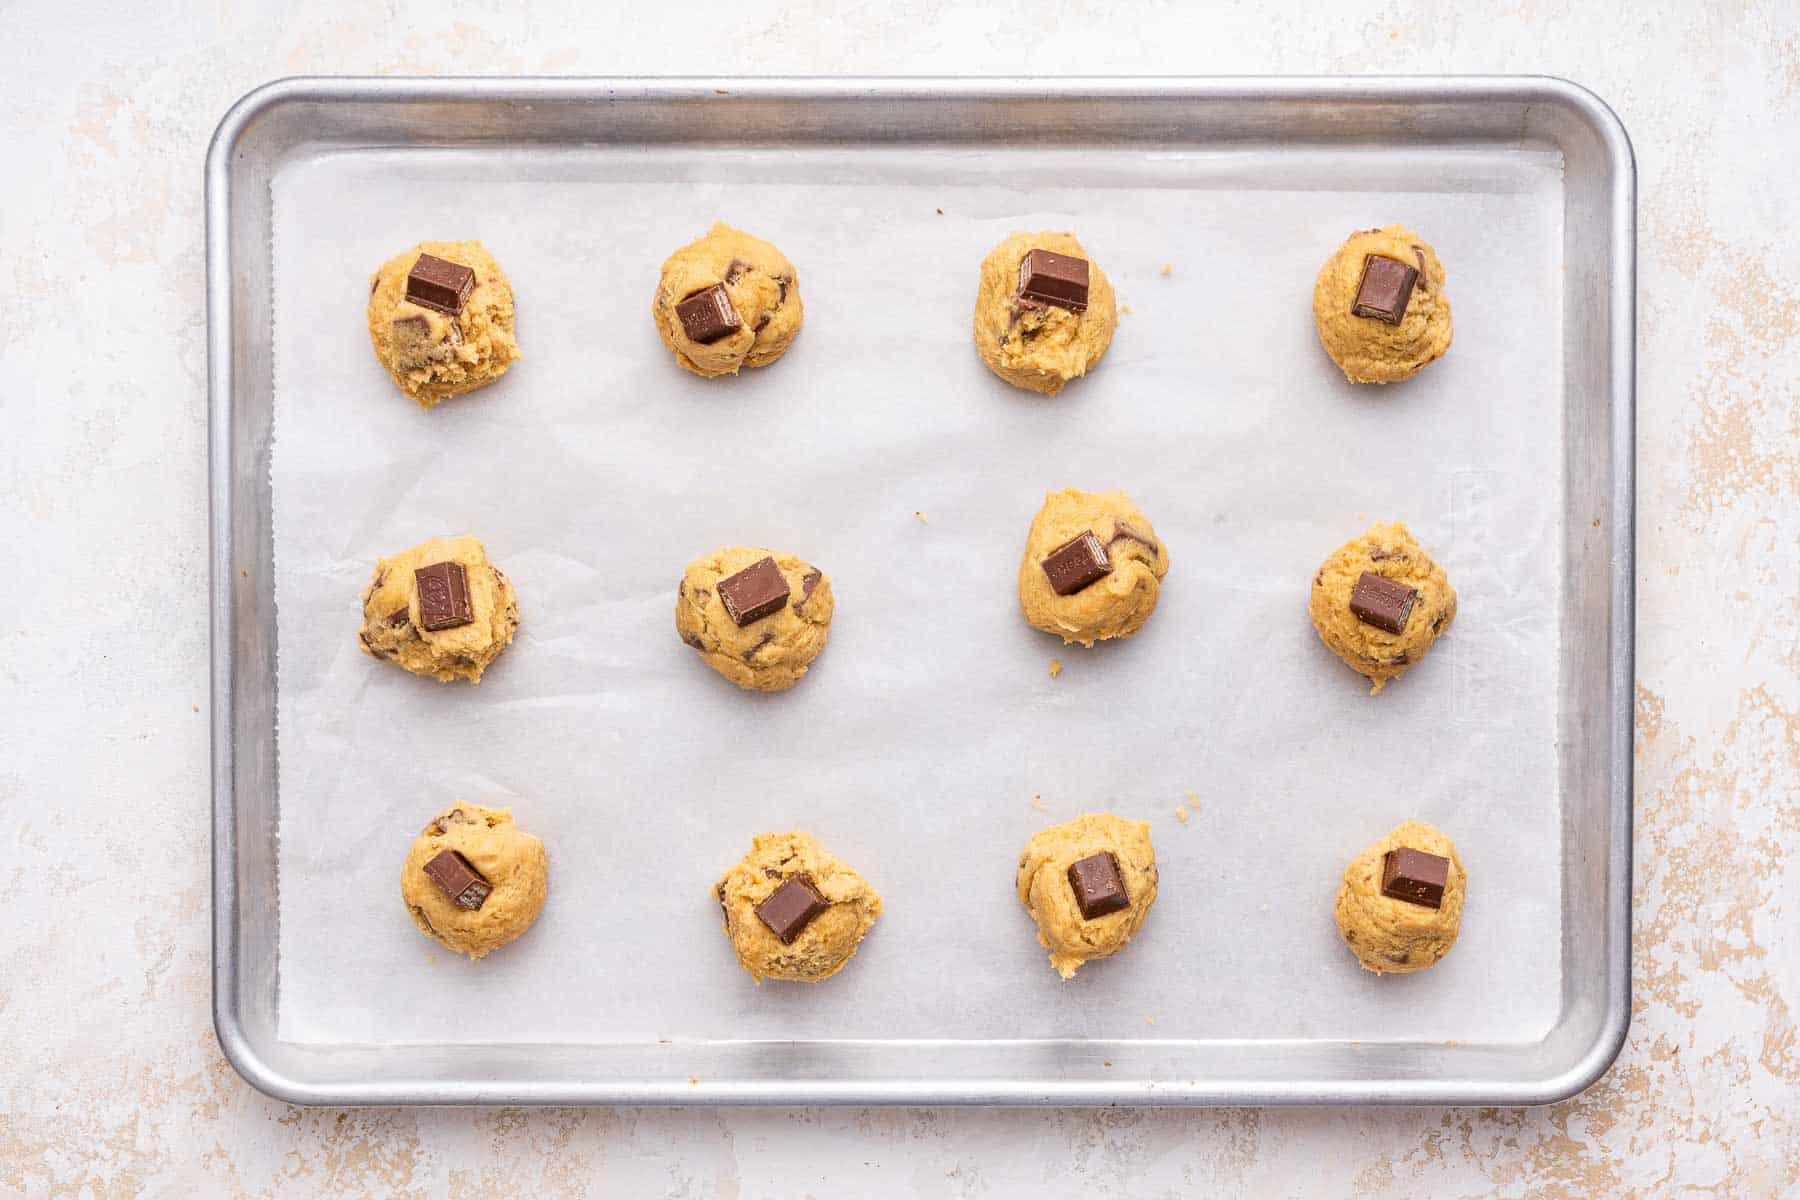 Twelve cookies on a baking sheet, before being baked.